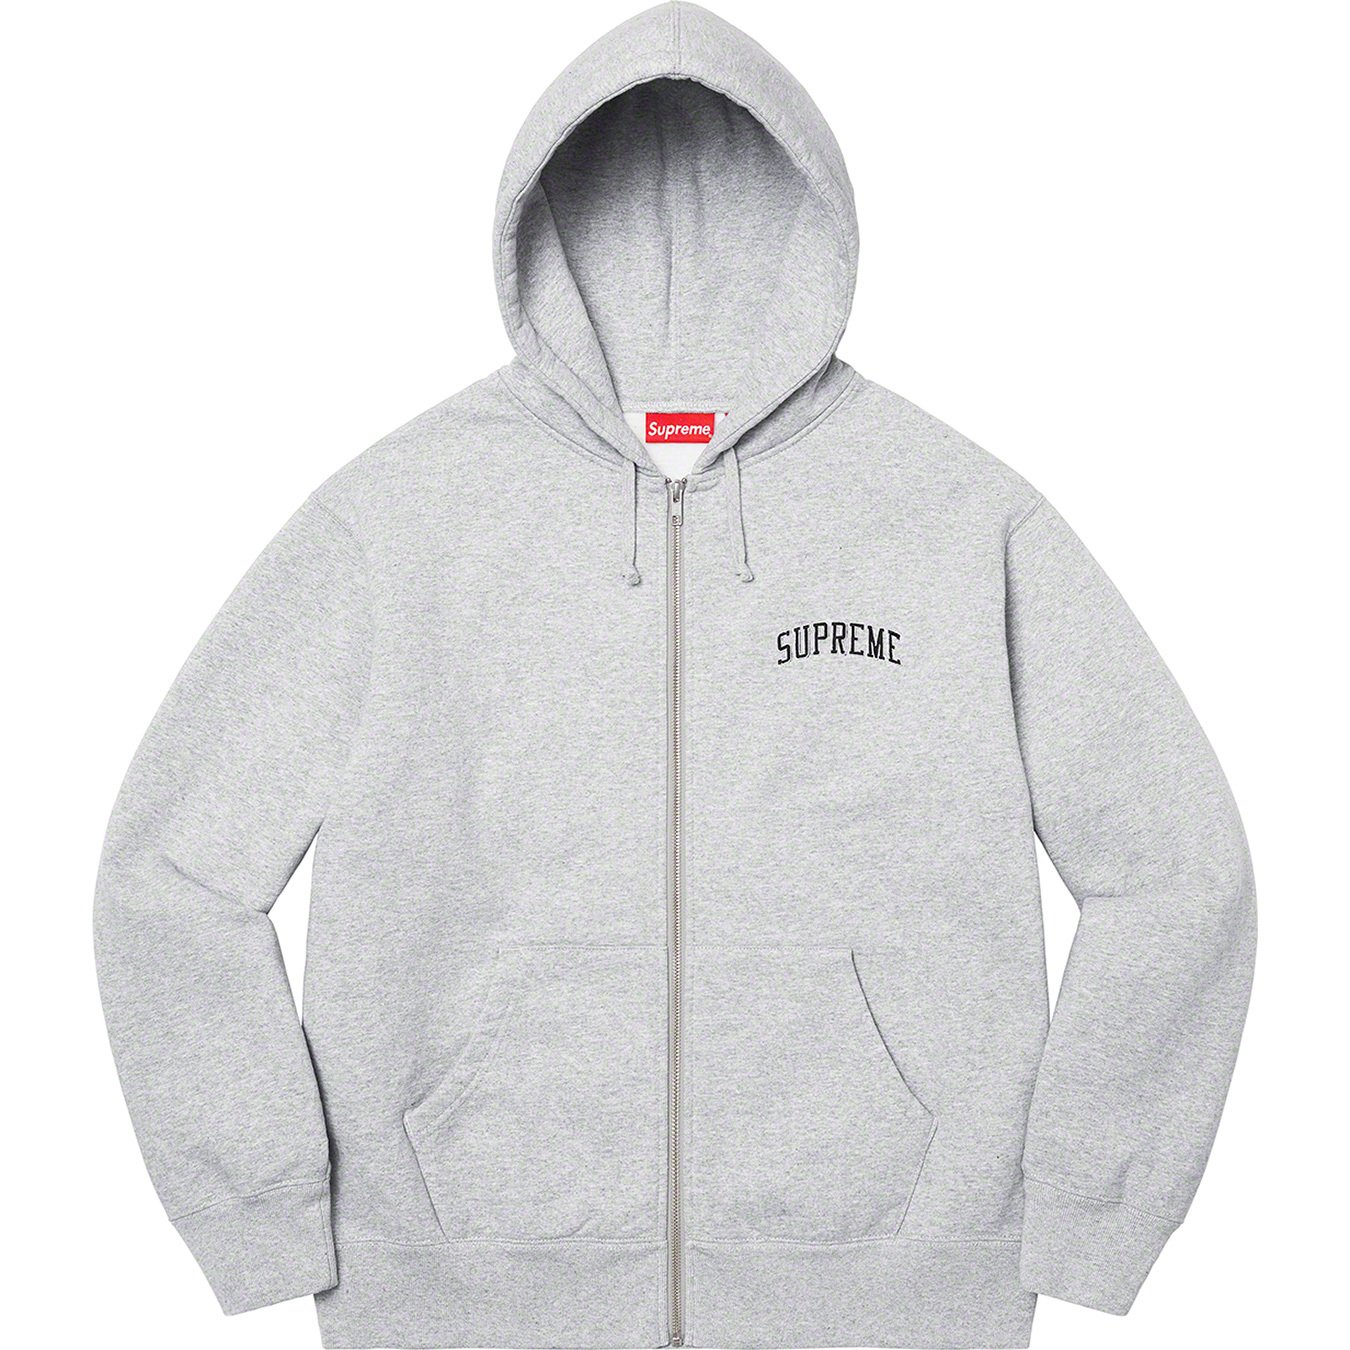 Supreme Zip Up  Buy hoodies, Supreme sweater, Supreme hoodie